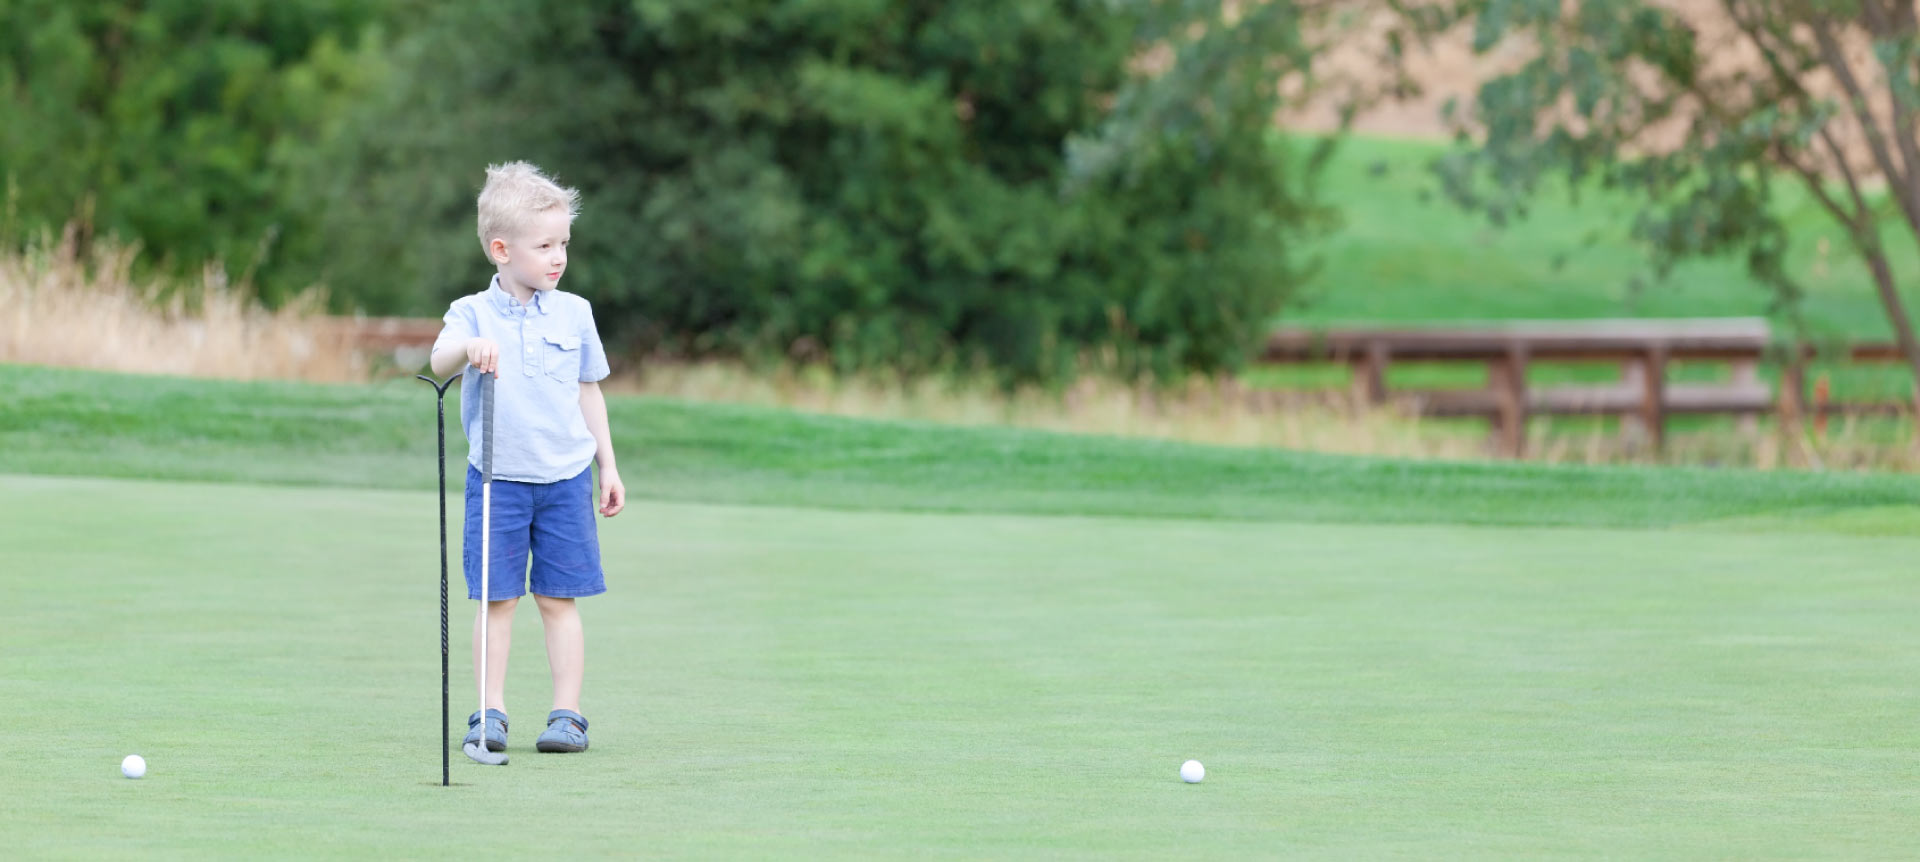 Junior Golf Clinics